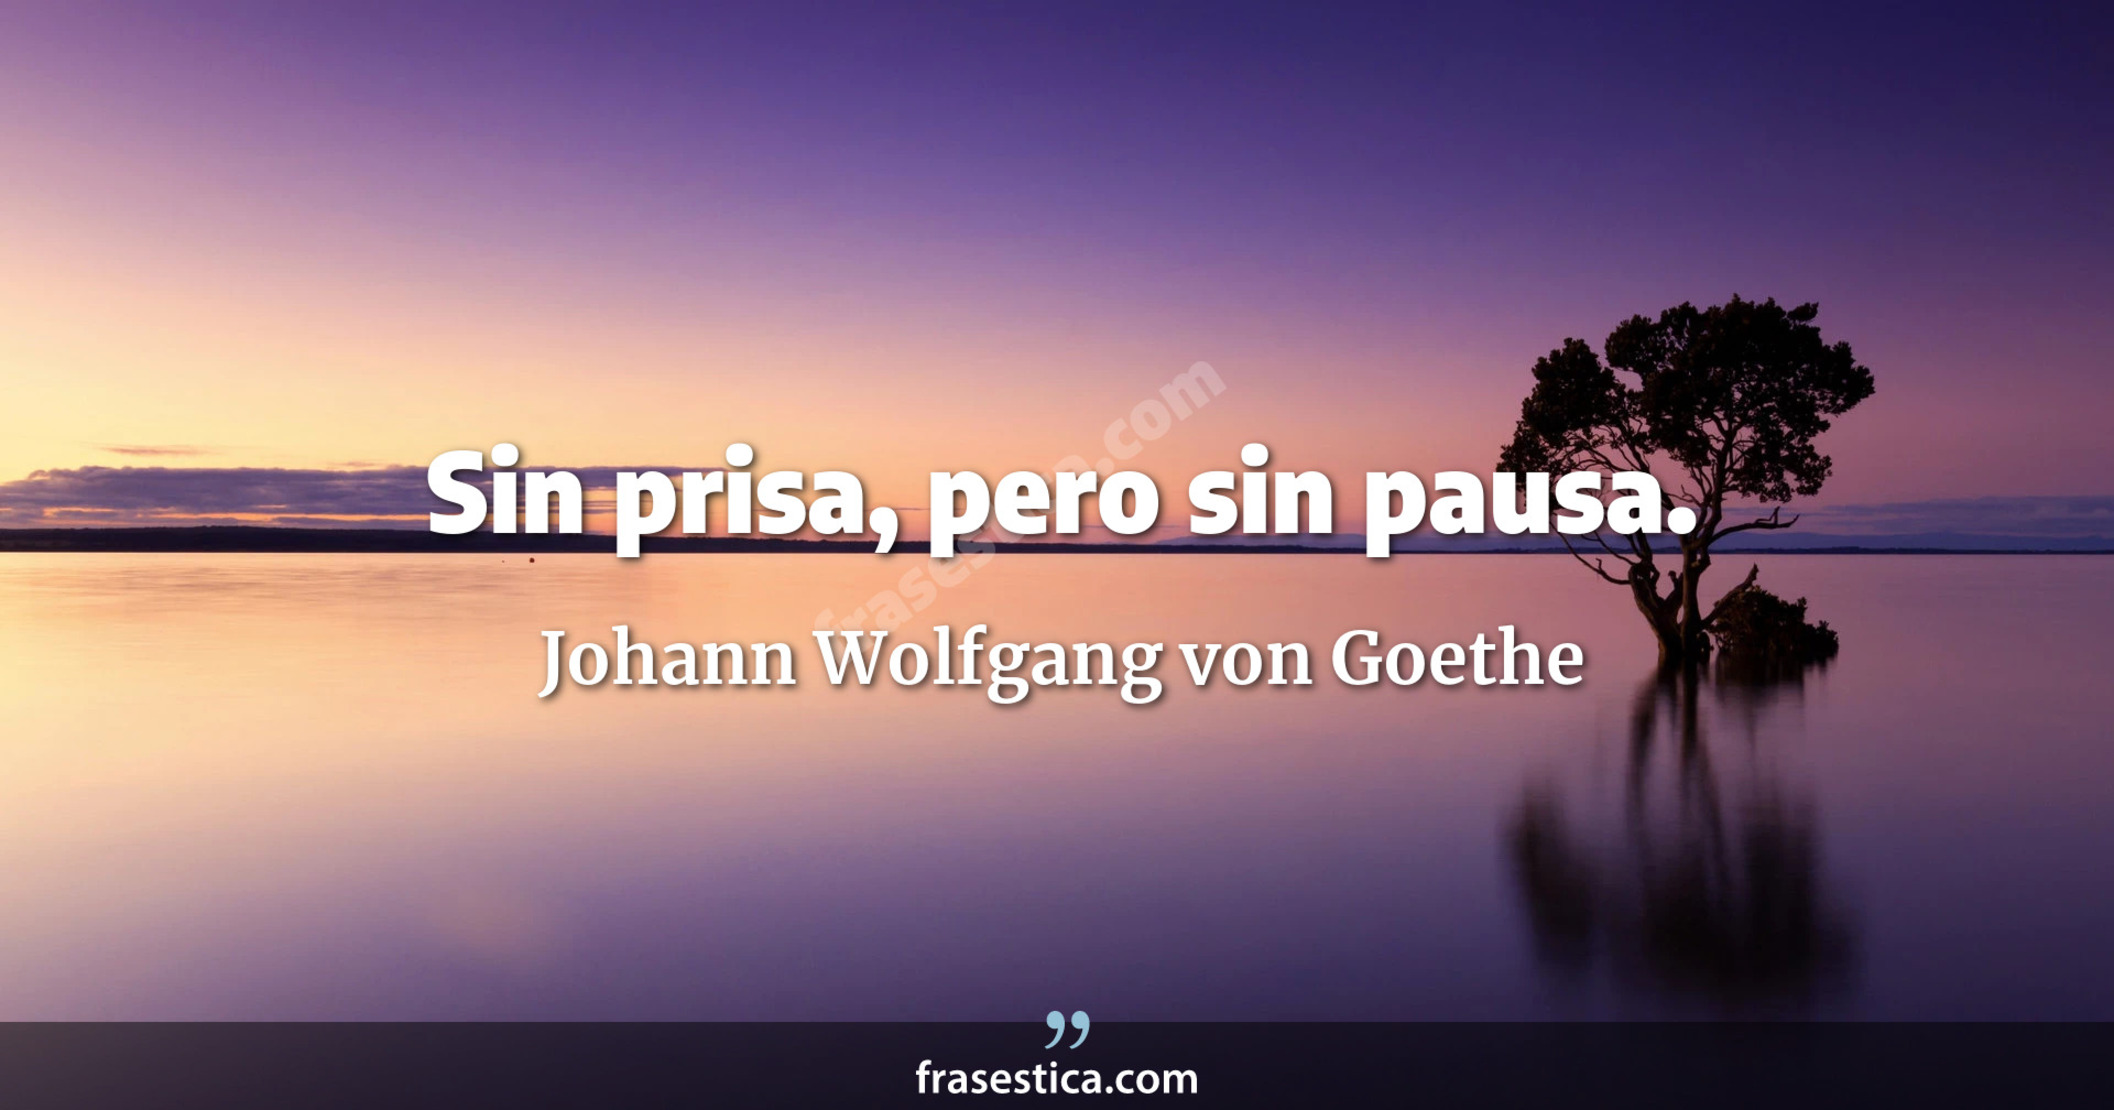 Sin prisa, pero sin pausa. - Johann Wolfgang von Goethe